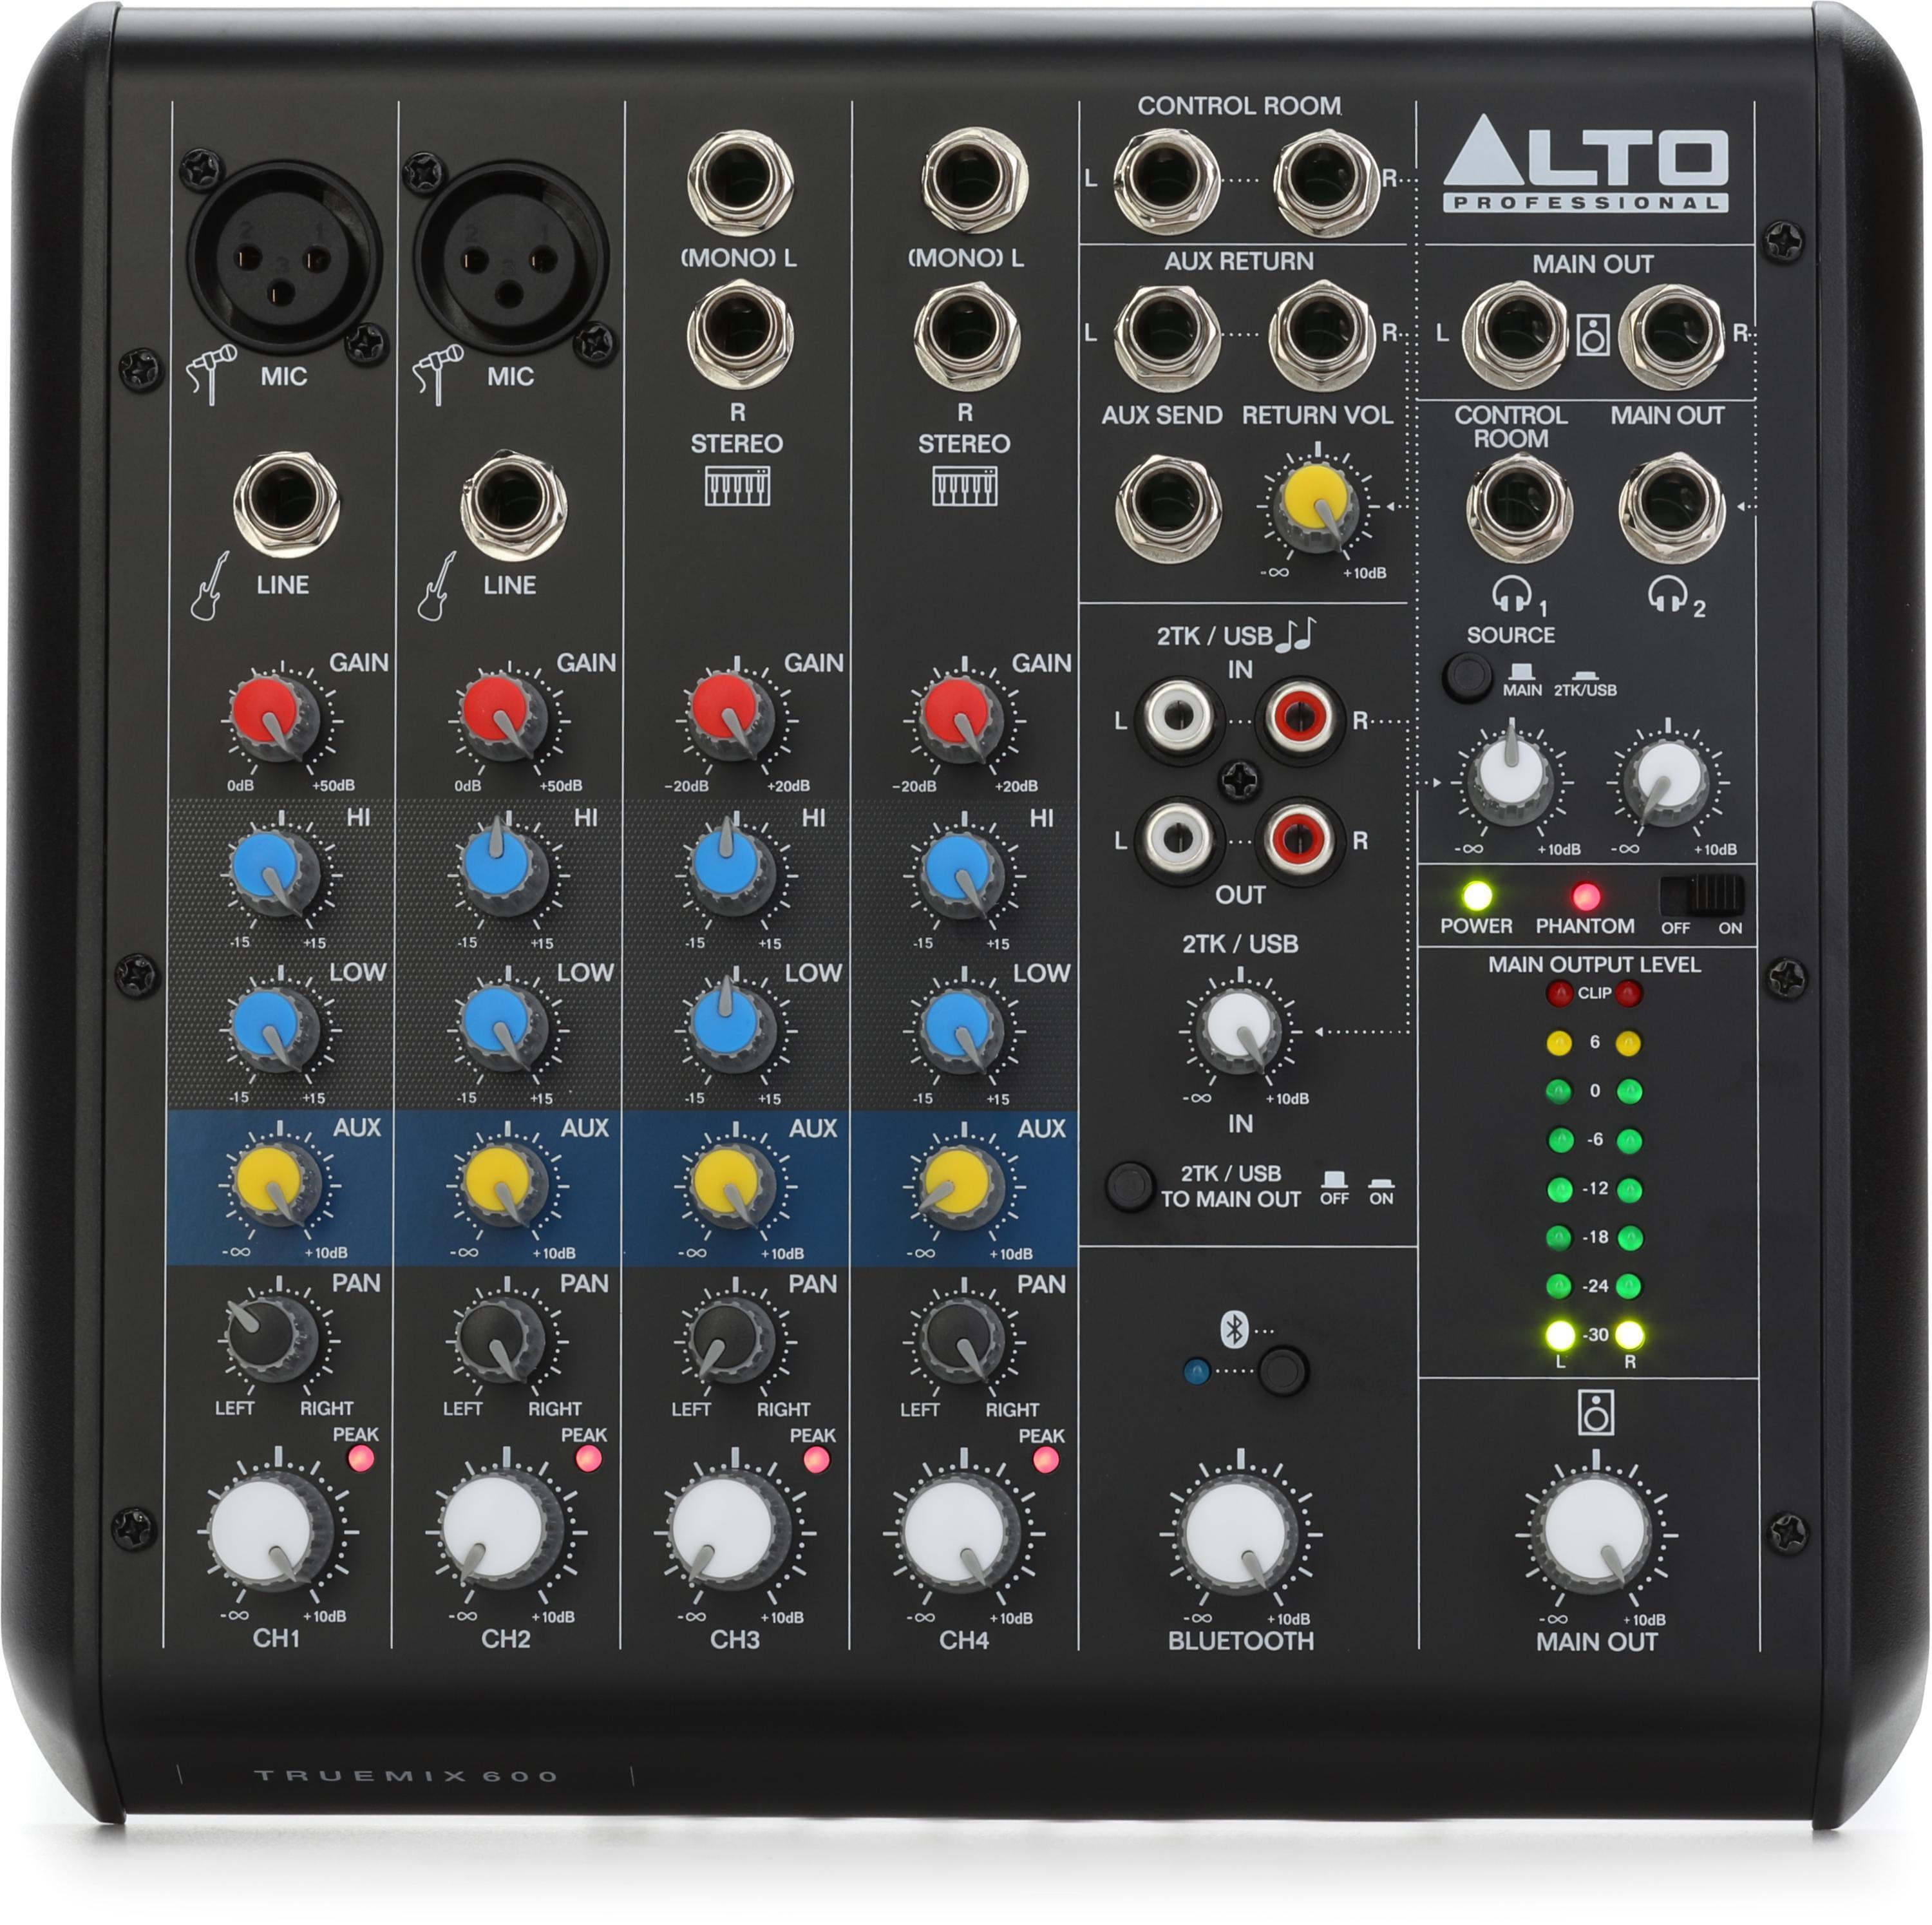 Alto Professional TrueMix 500 Series 5-Channel Analog Mixer with USB